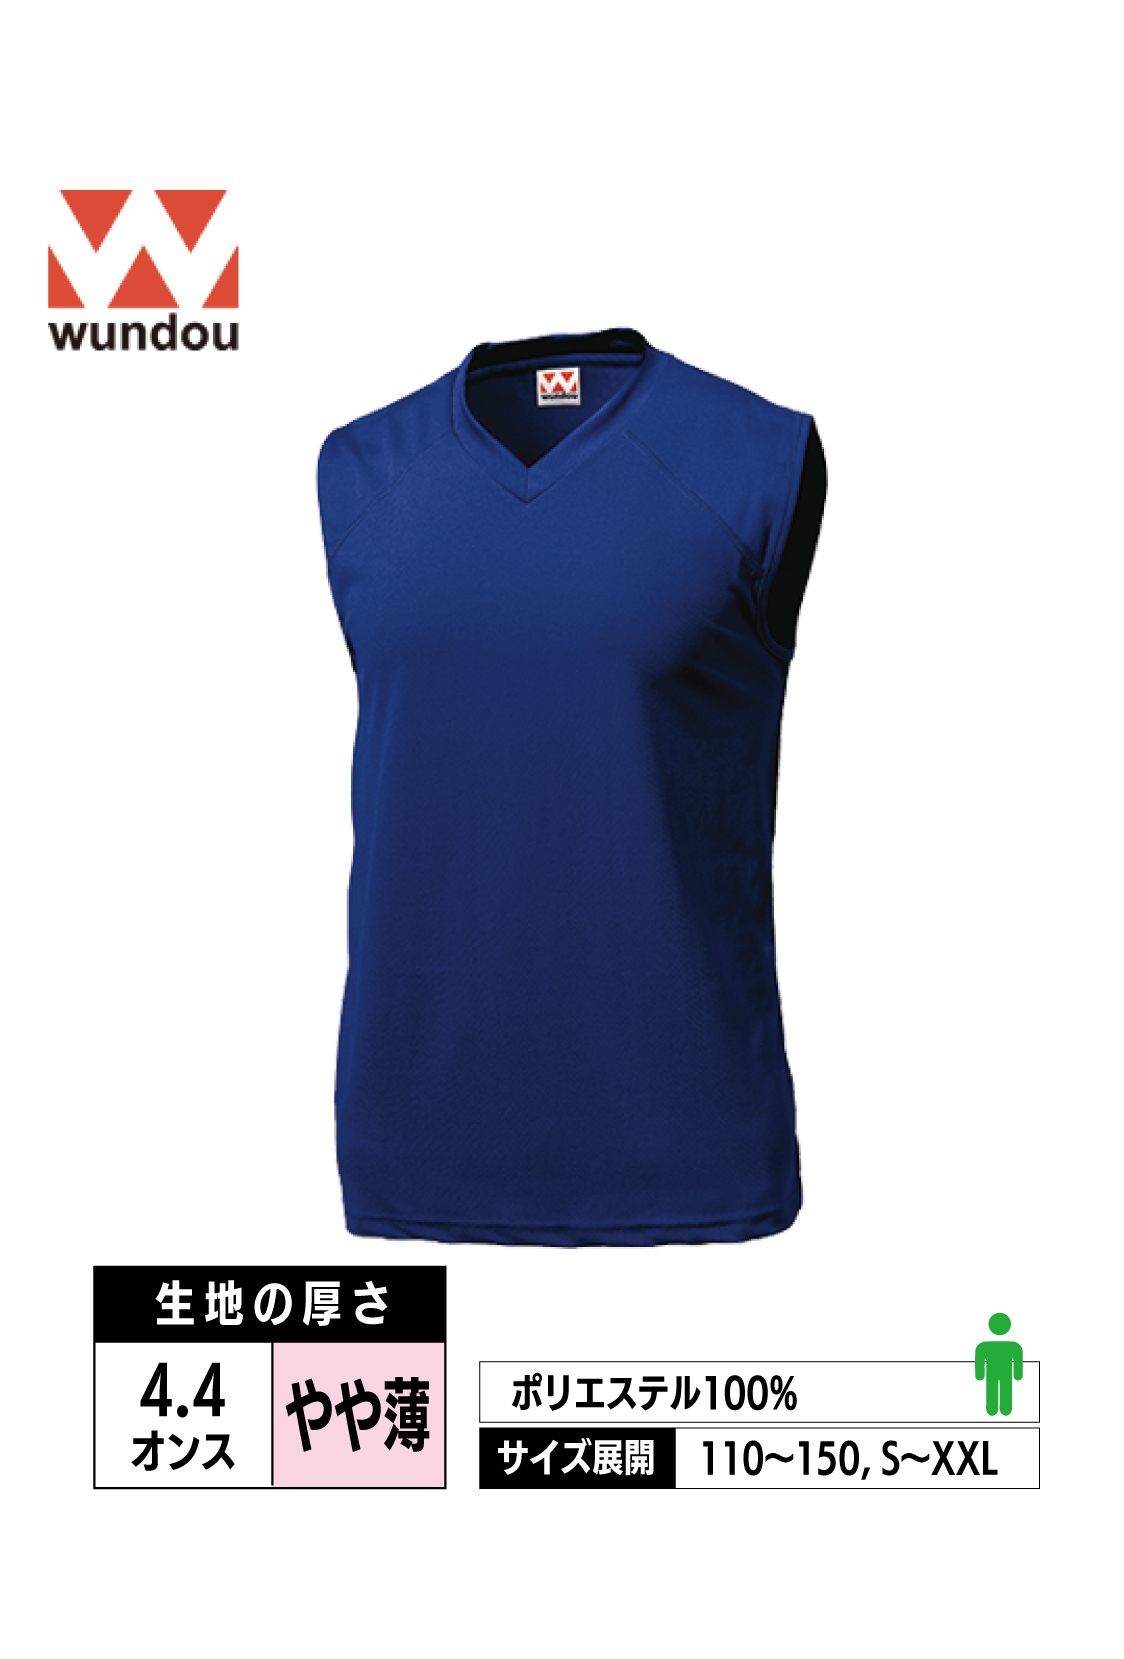 P1810｜ベーシックバスケットシャツ【全11色】wundou